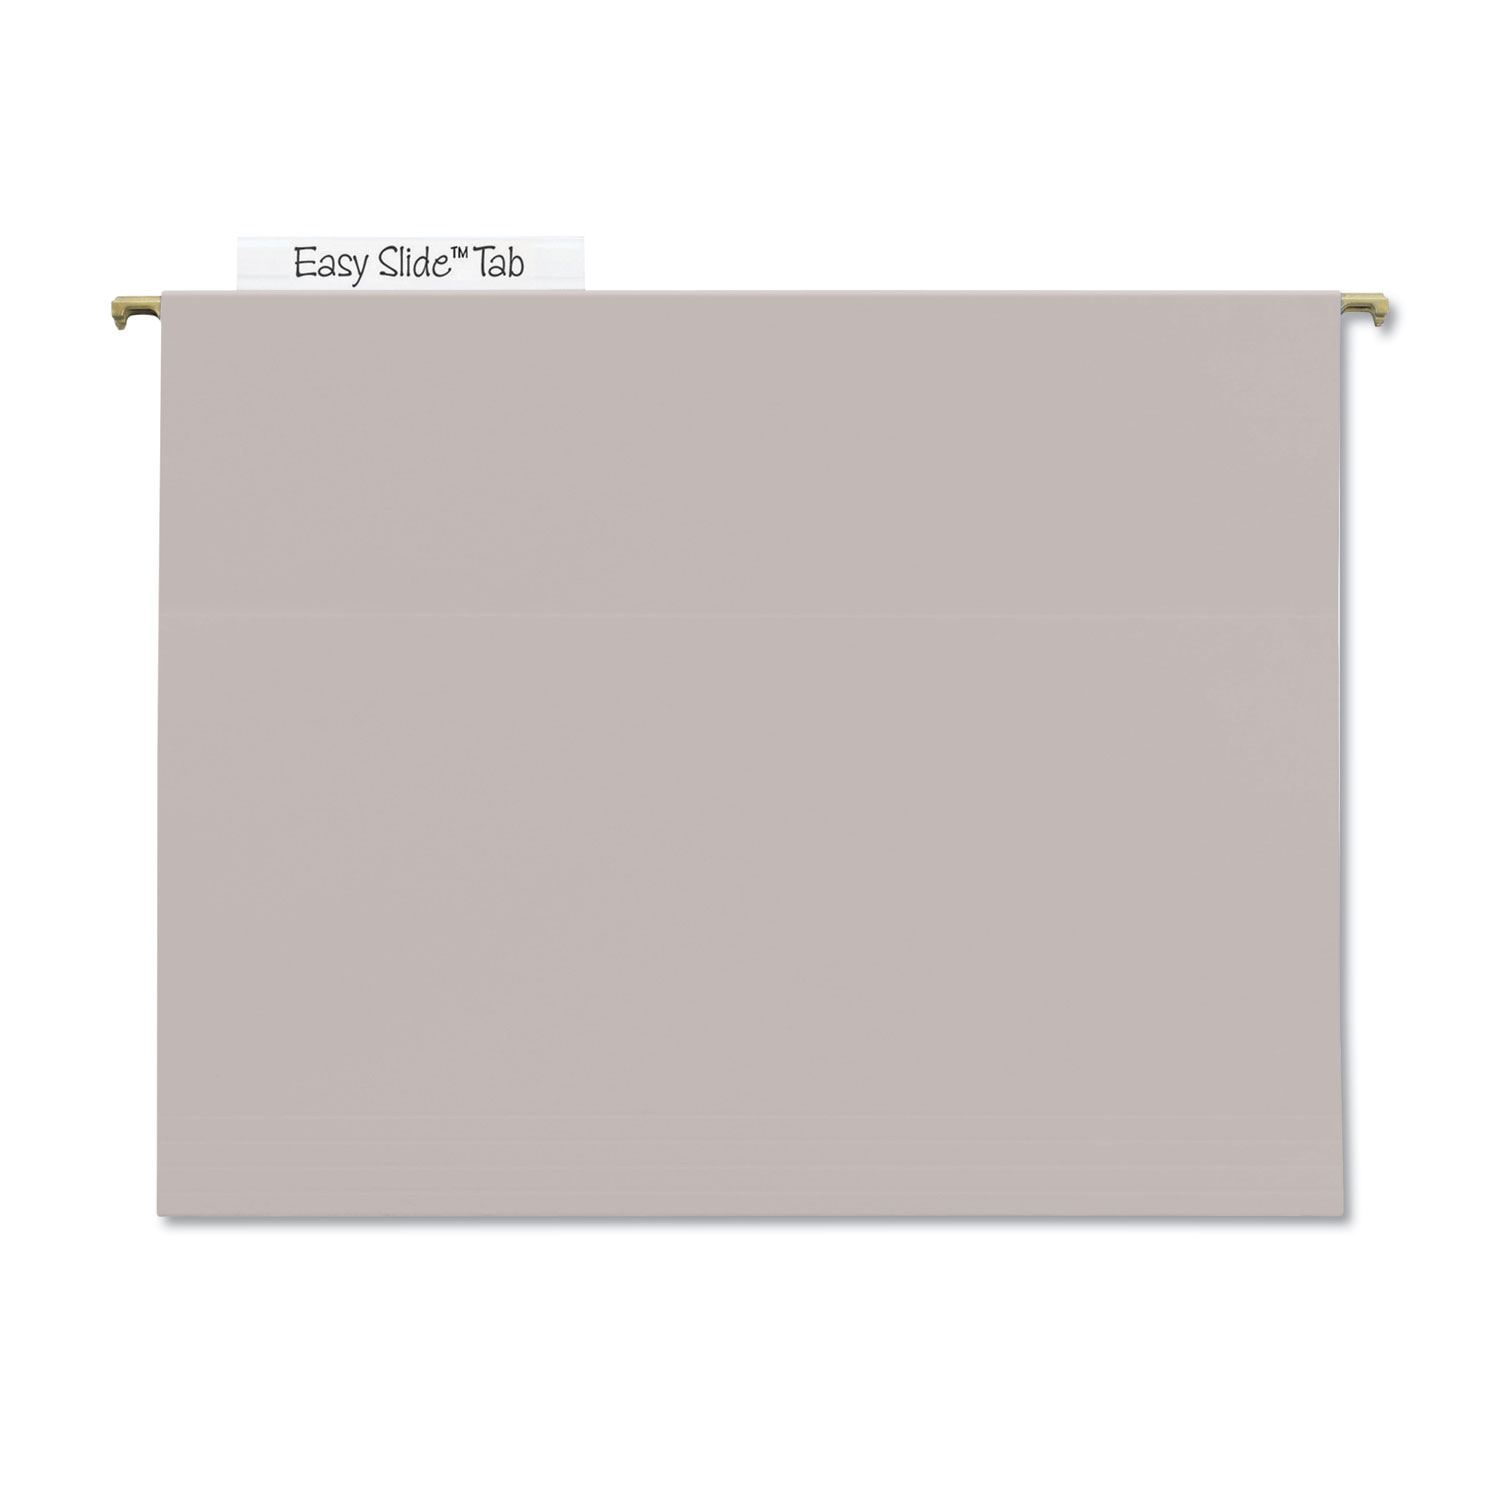 TUFF Hanging Folders with Easy Slide Tab, Letter Size, 1/3-Cut Tab, Steel Gray, 18/Box